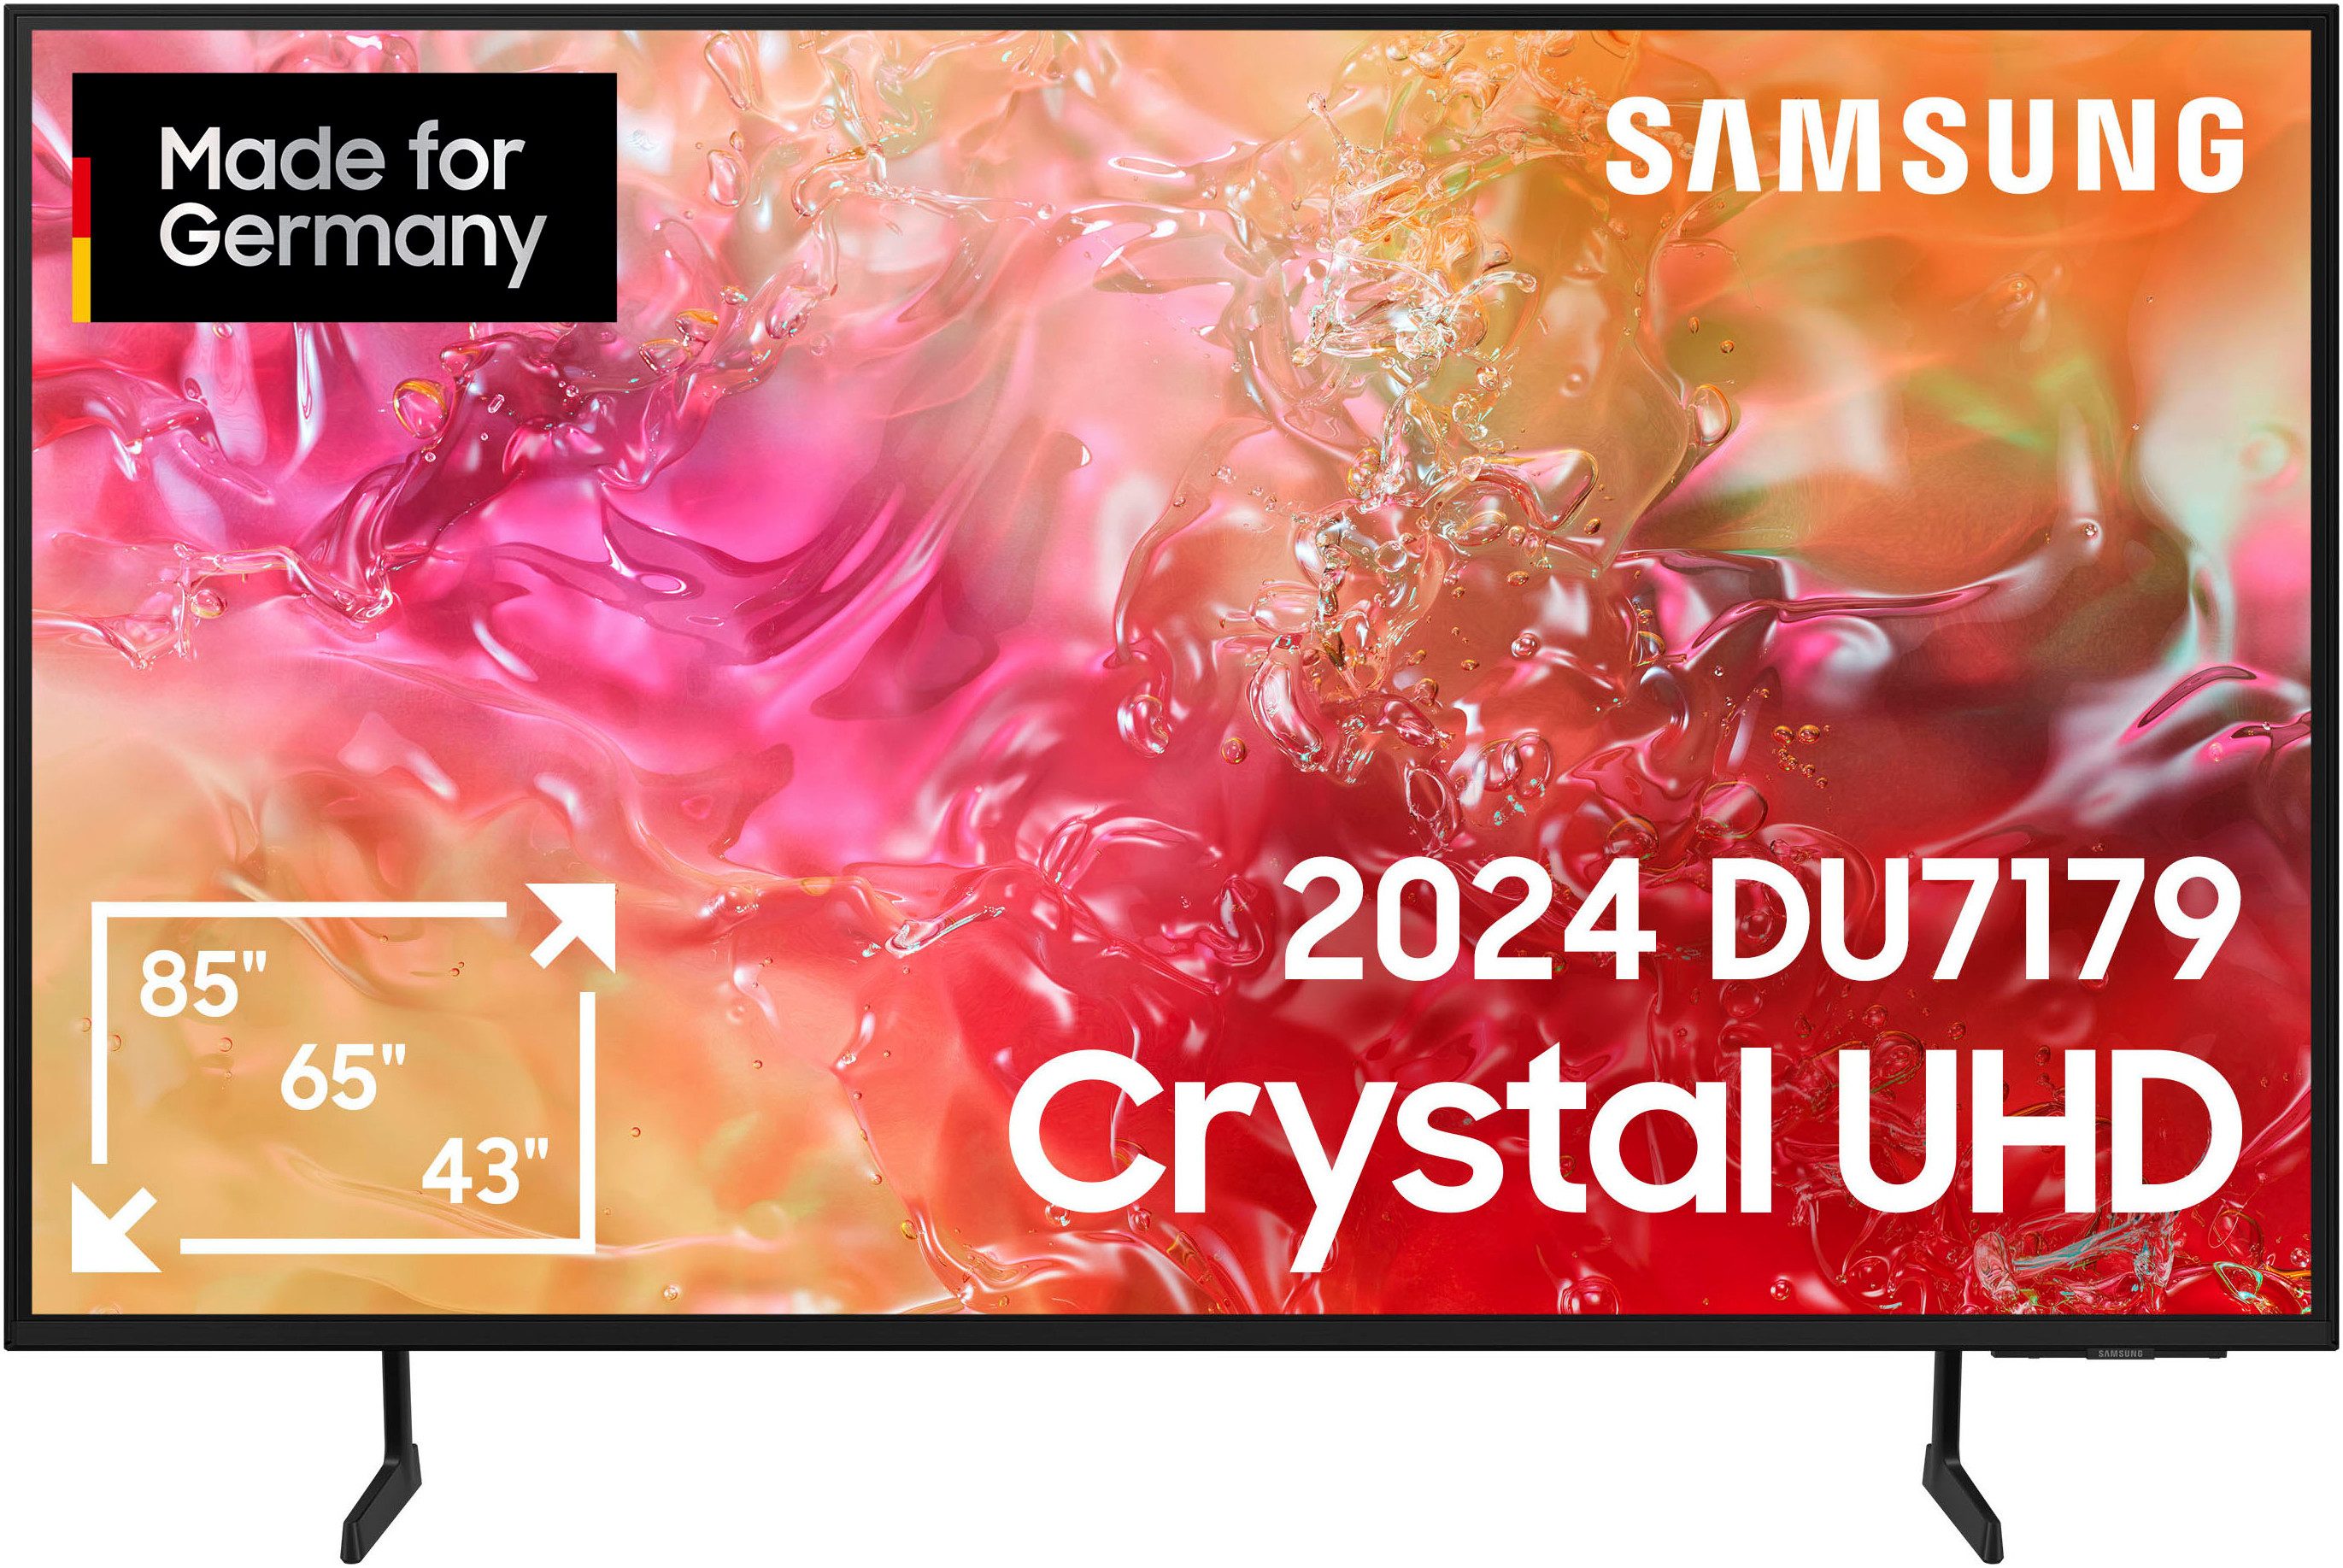 Samsung Crystal UHD 4K DU7179 LED-TV 163 cm 65 inch Energielabel G (A G) CI+*, DVB-C, DVB-S2, DVB-T2